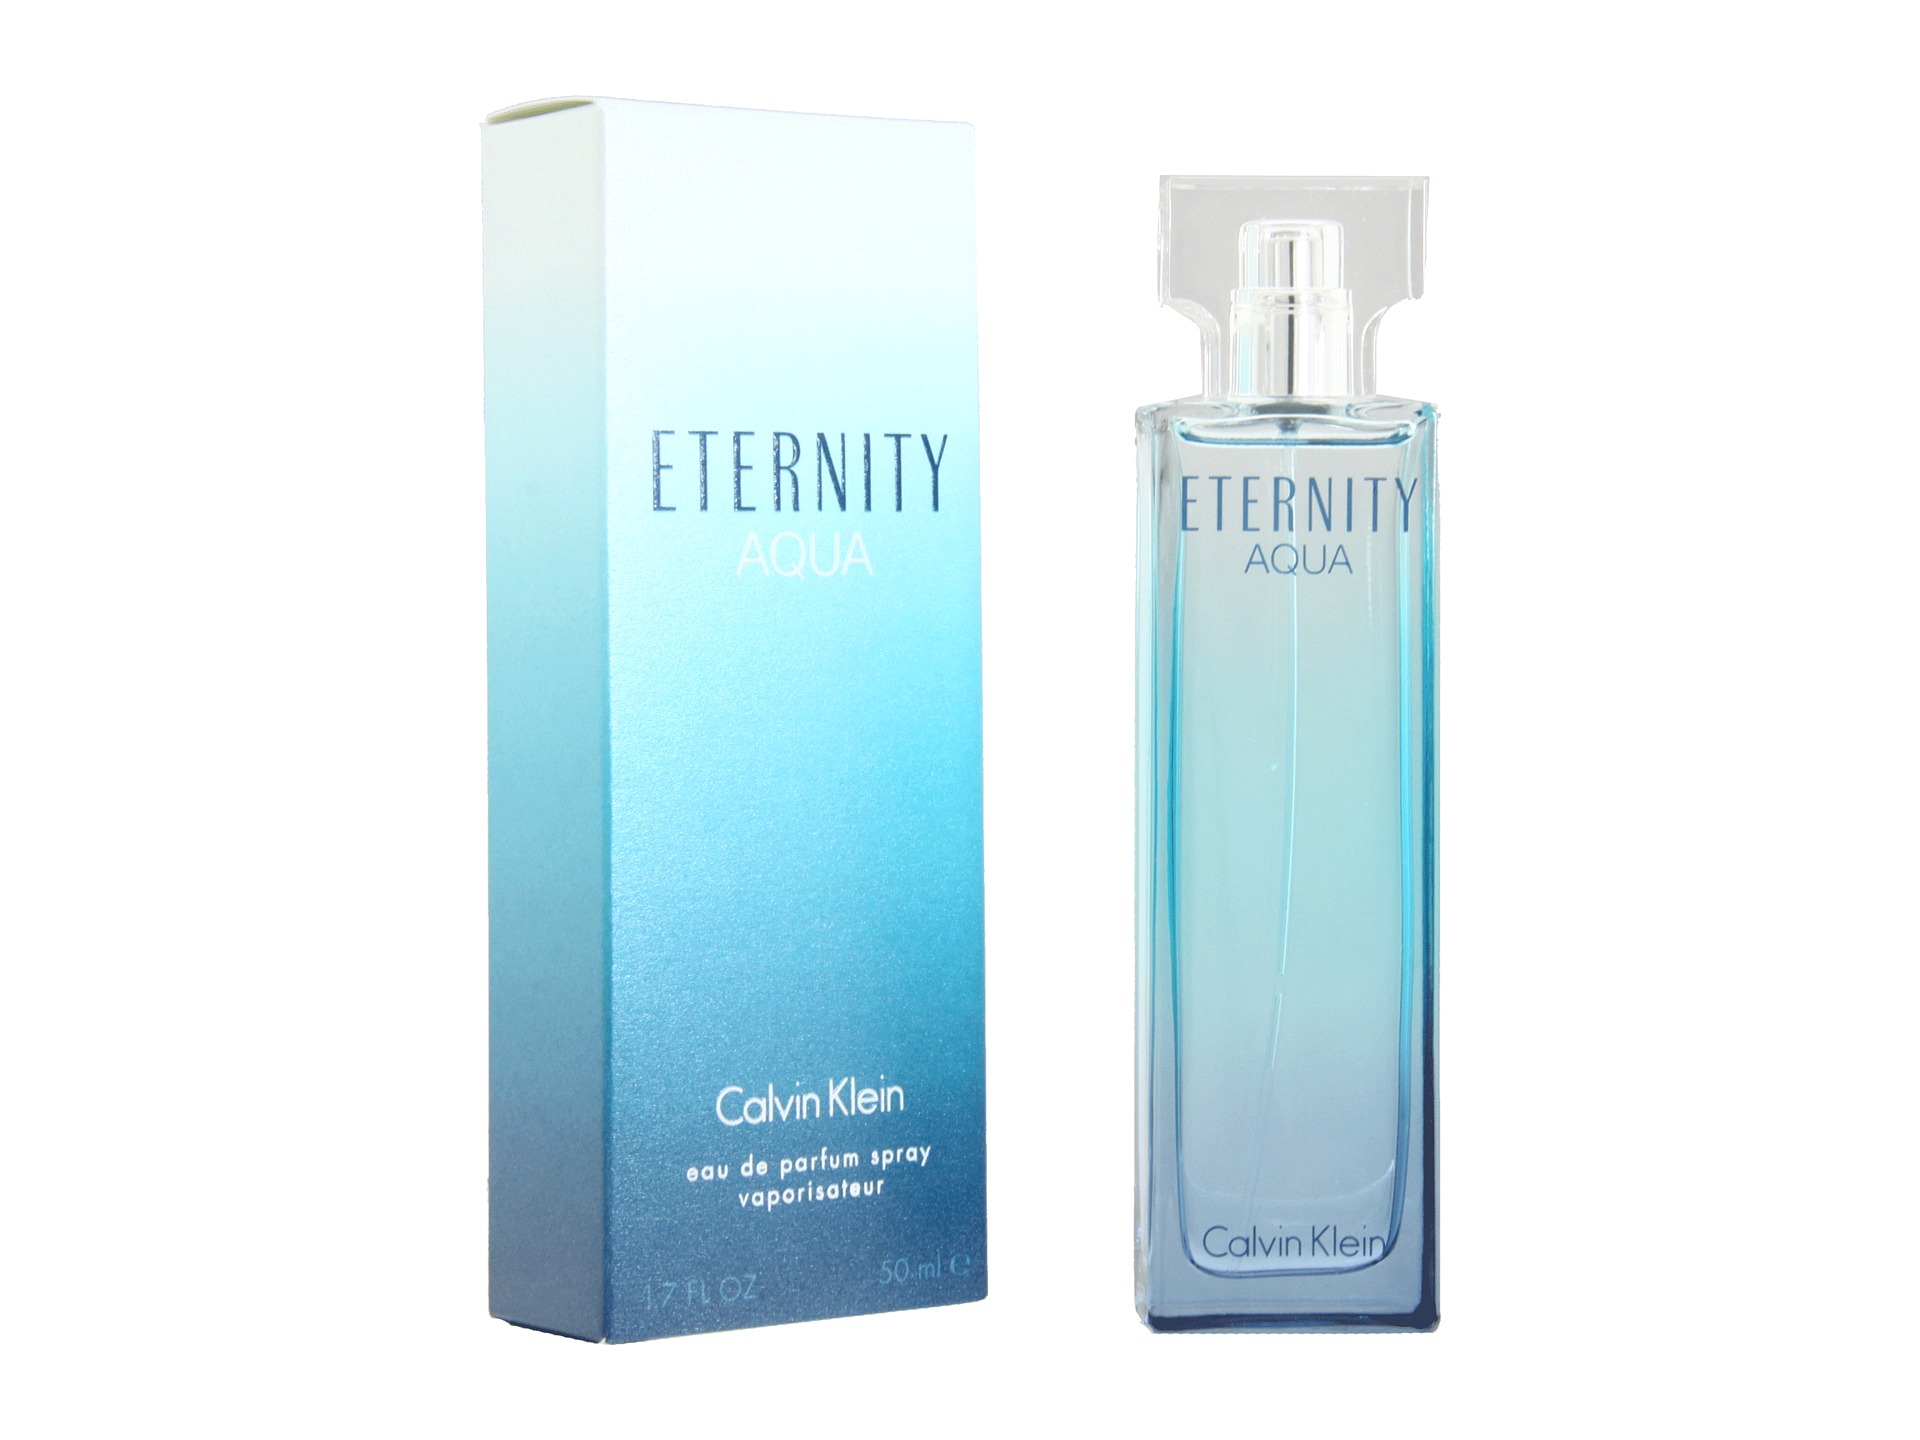 Calvin Klein Eternity Aqua For Women 1 7 Oz Eau De Parfum Spray ...